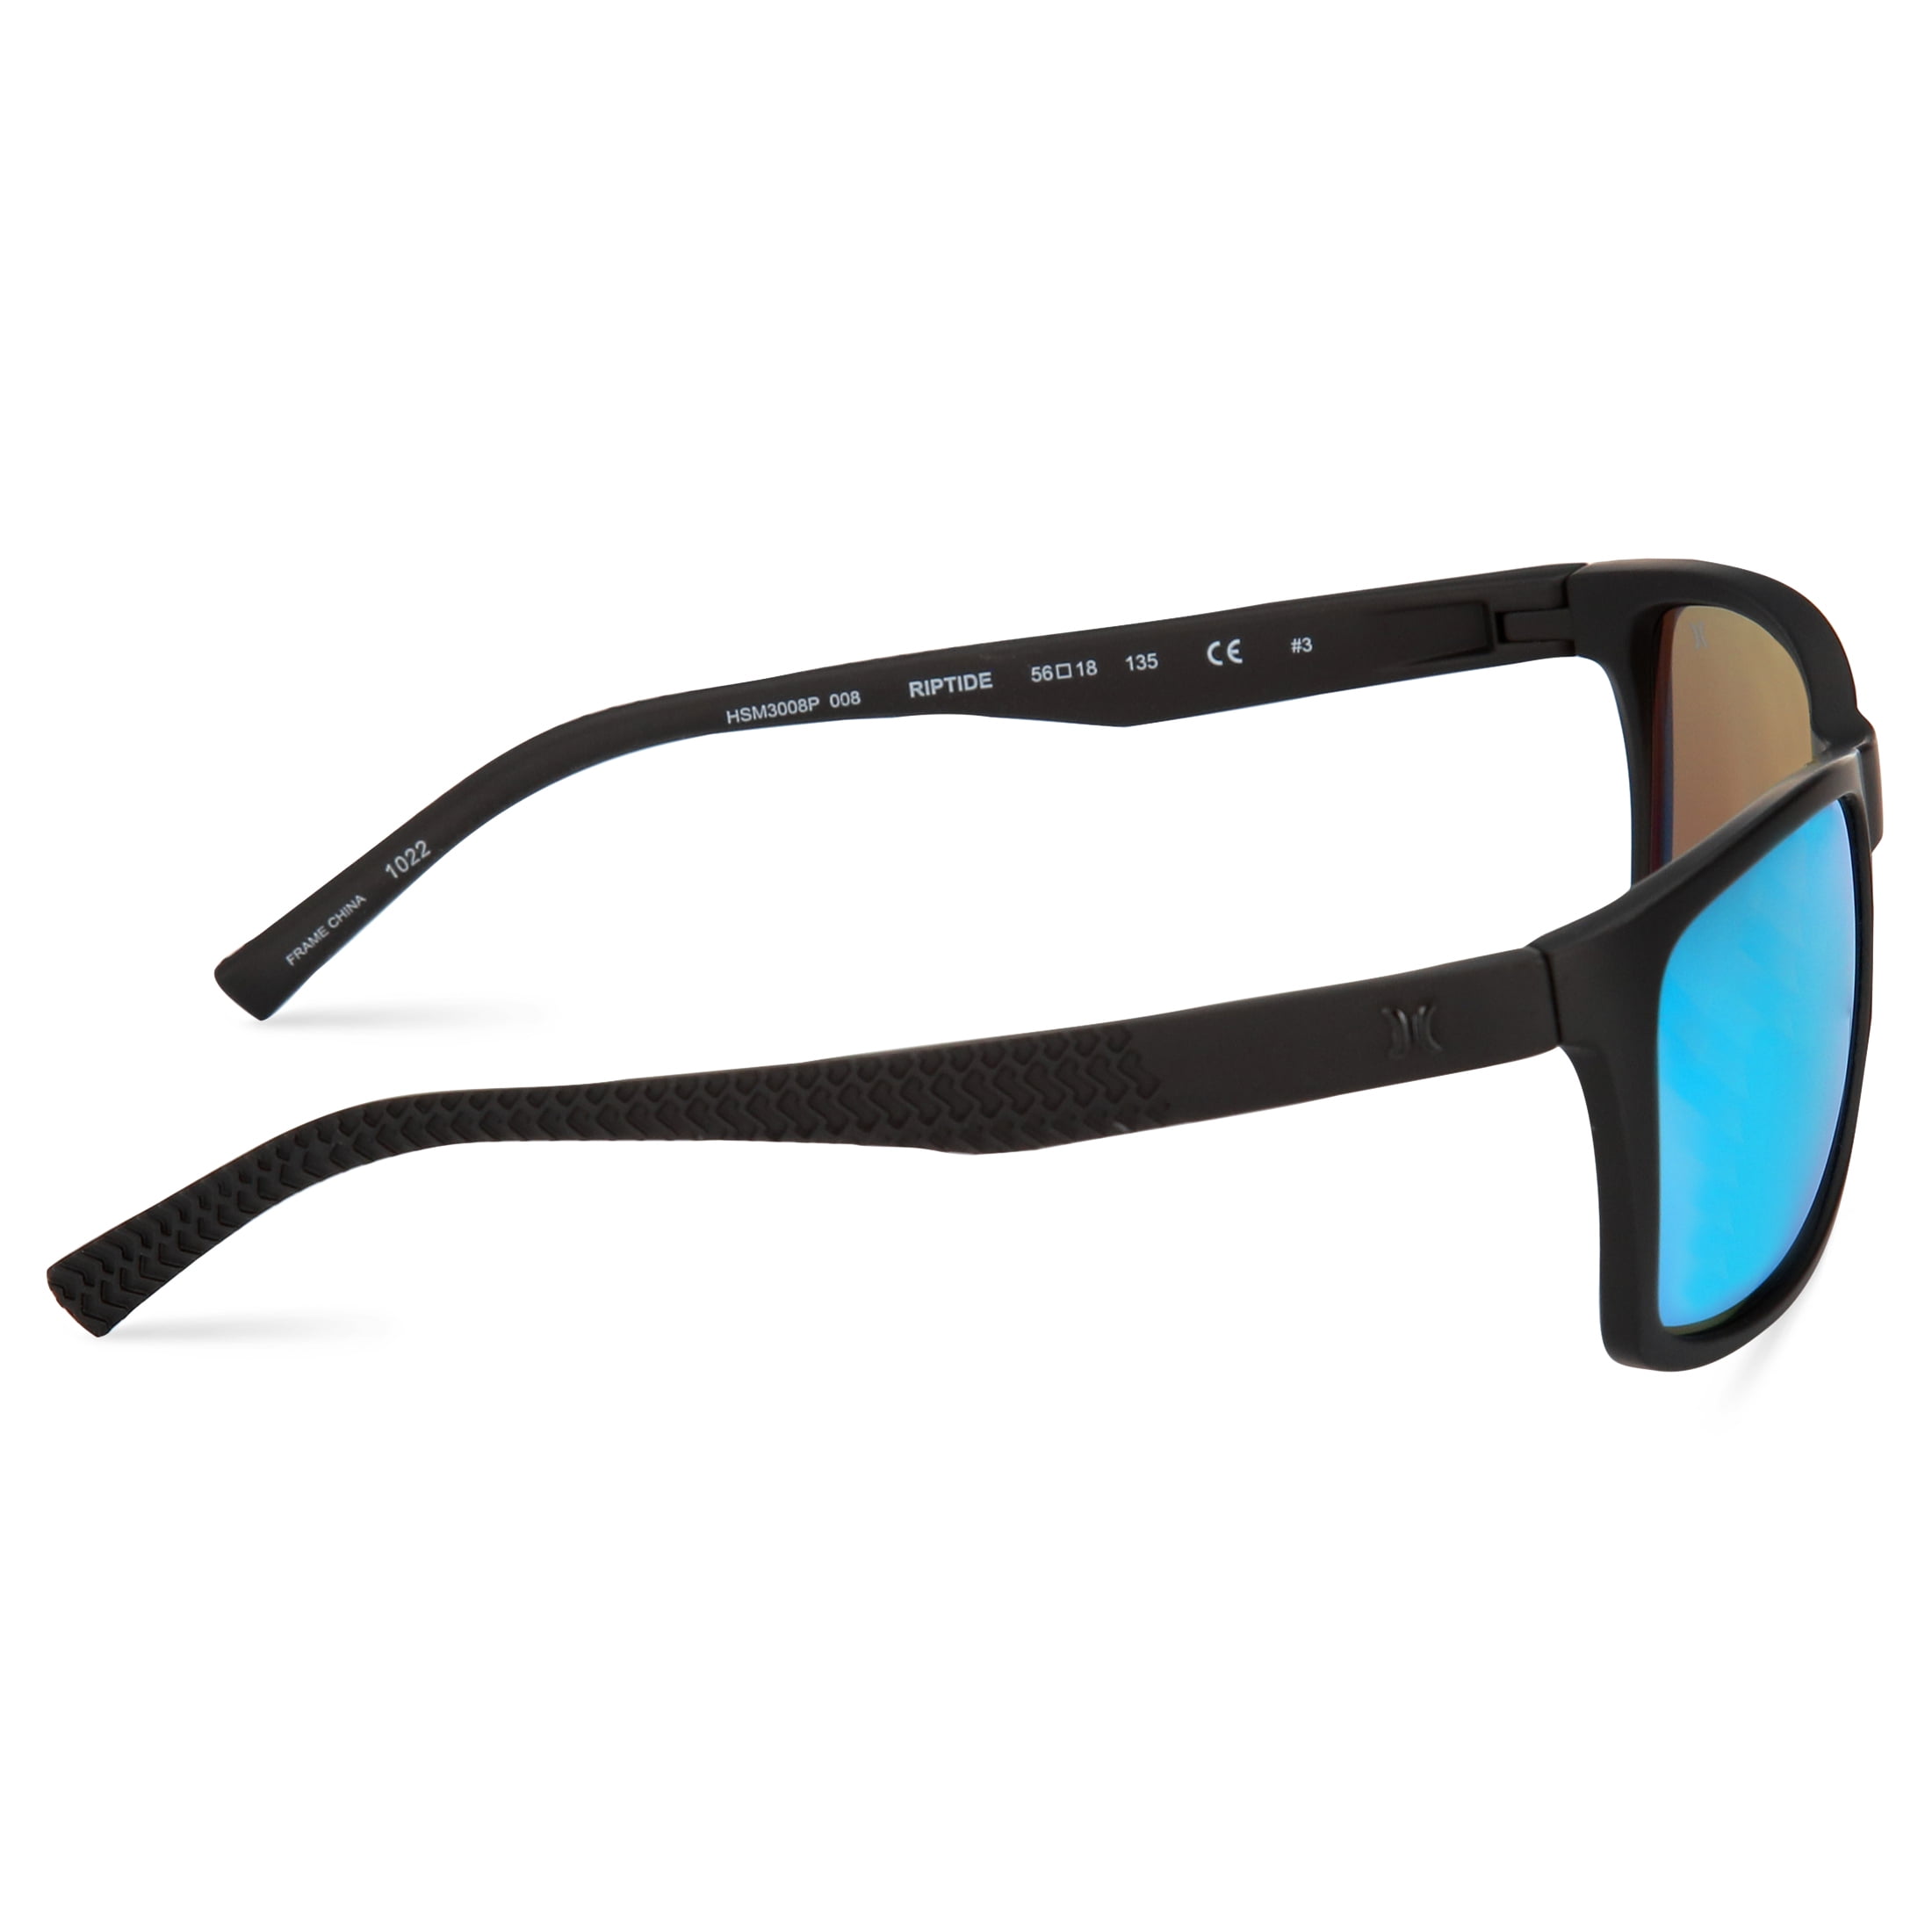 Walmart Zachary - Hurley sunglasses now available at Walmart